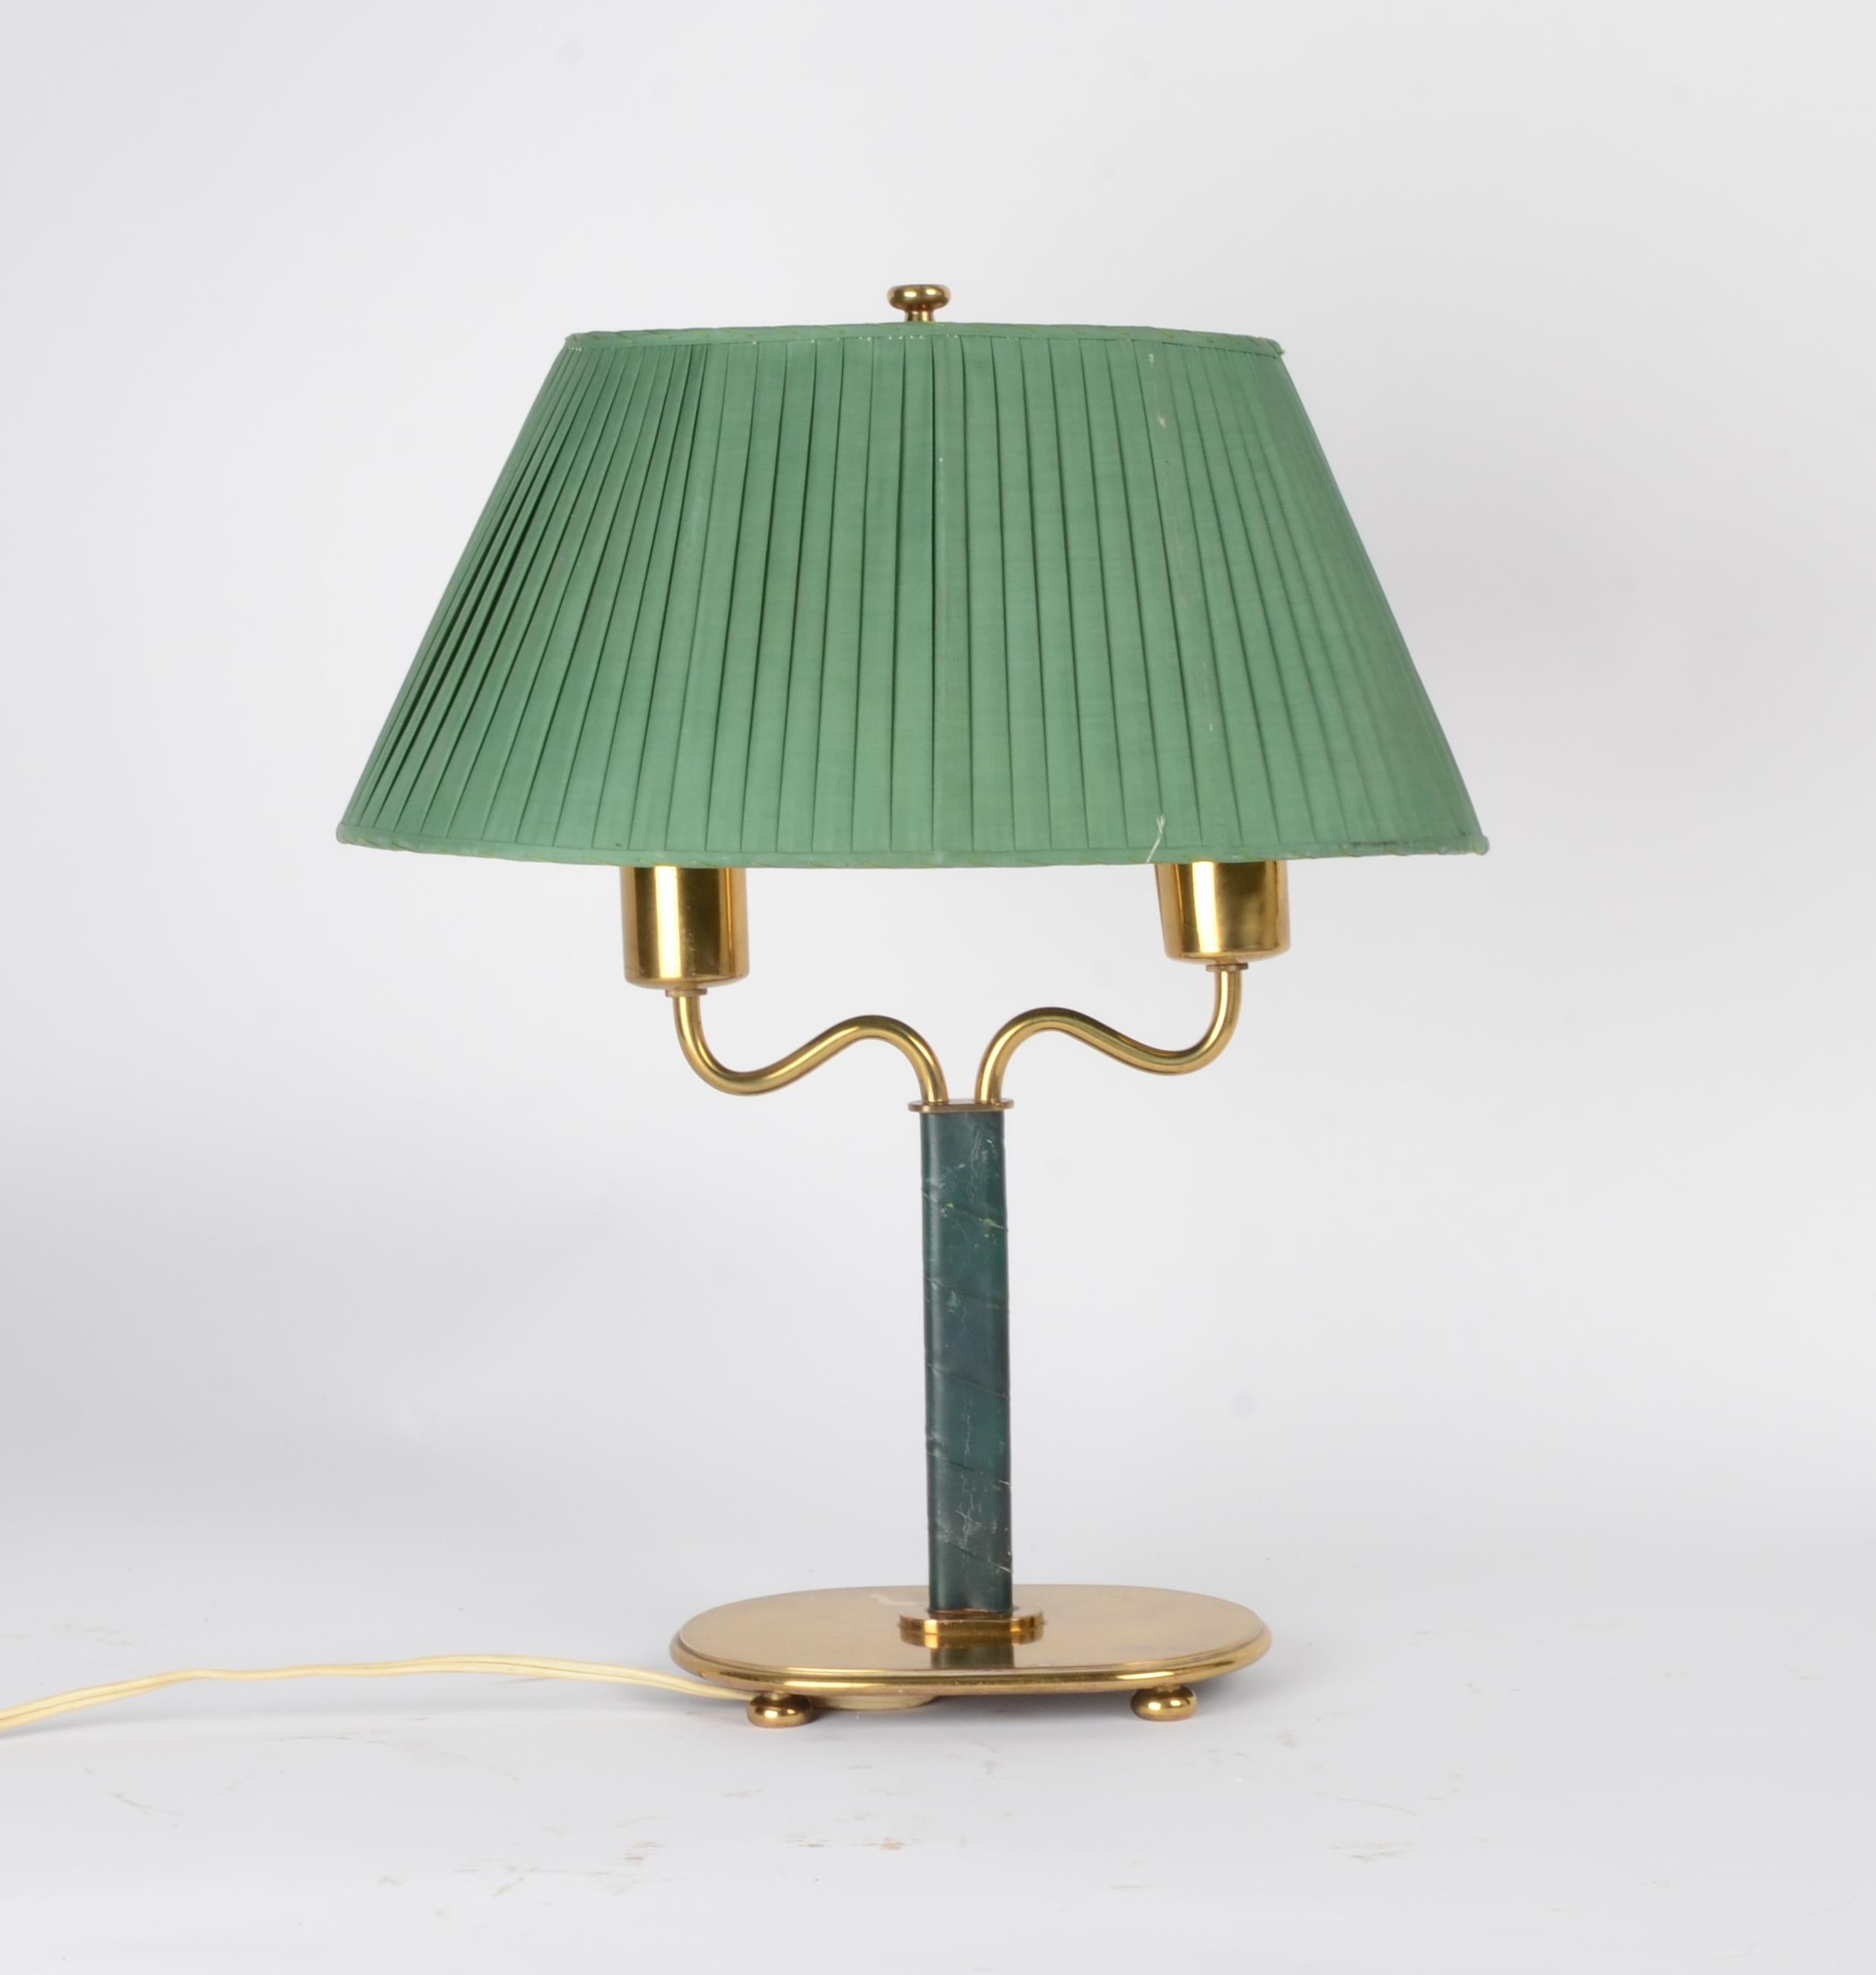 Table lamp model 2388, designed by Josef Frank in 1936. Manufactured by Firma Svenskt Tenn, Sweden, mid-1900s.